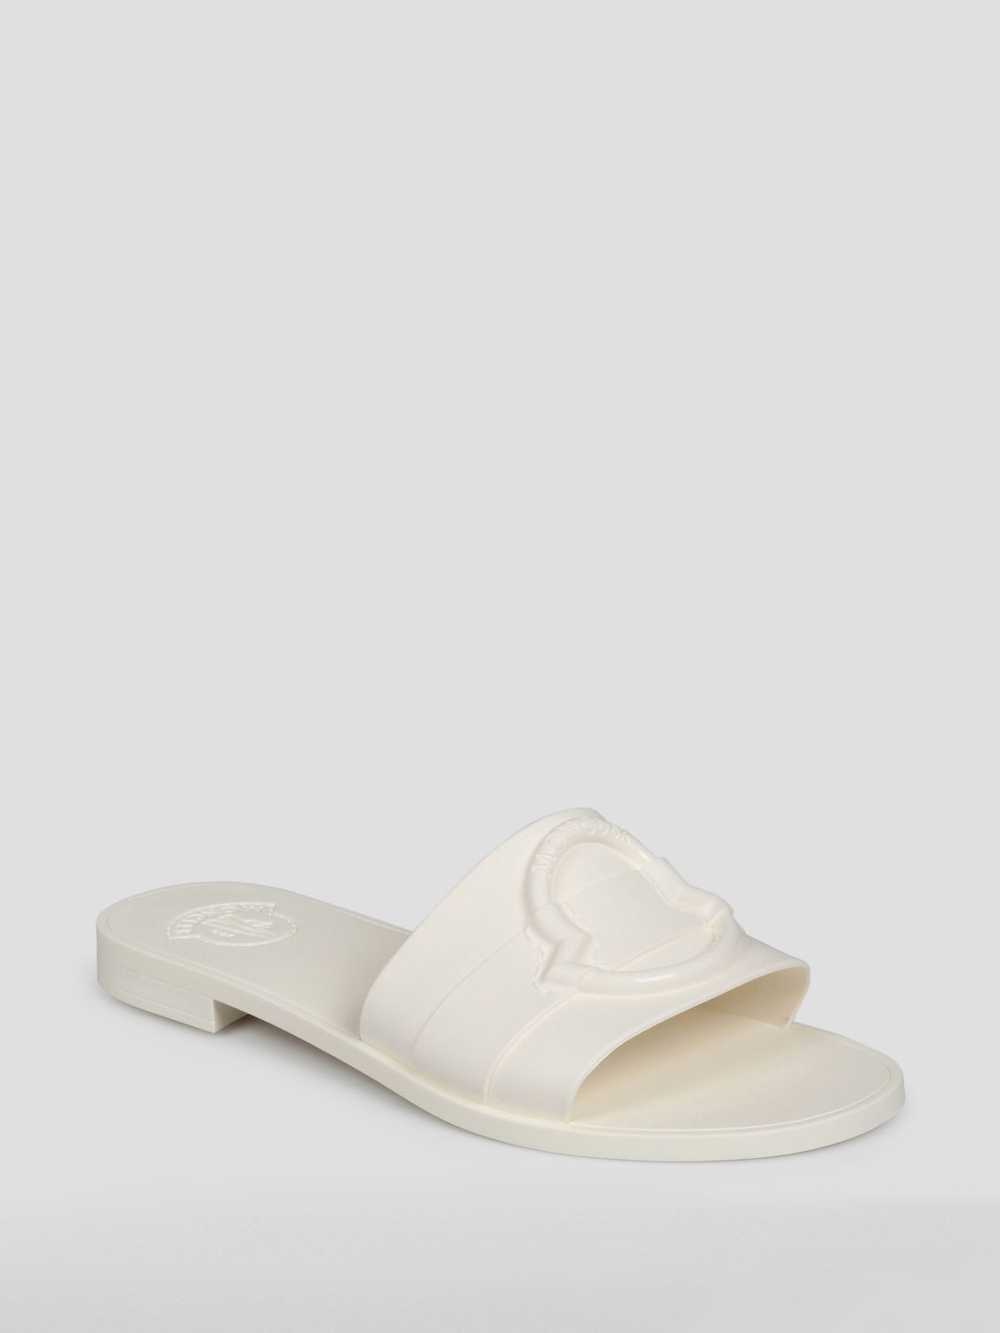 Moncler Moncler Flat Sandals Woman White - image 2